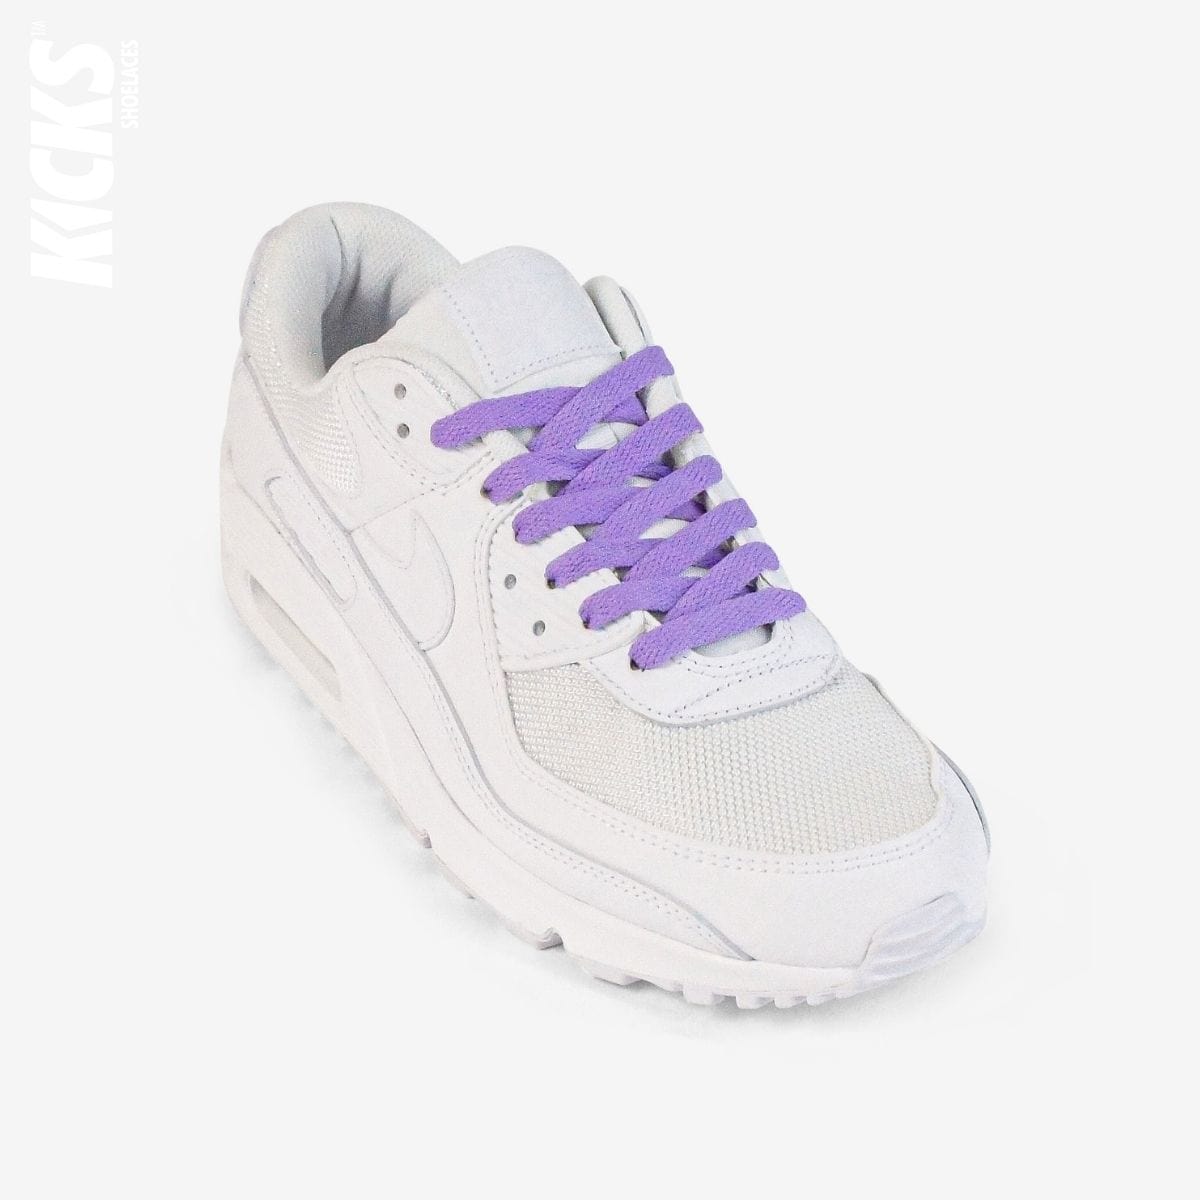 novelty-shoelaces-on-white-sneaker-using-kids-purple-flat-shoelaces